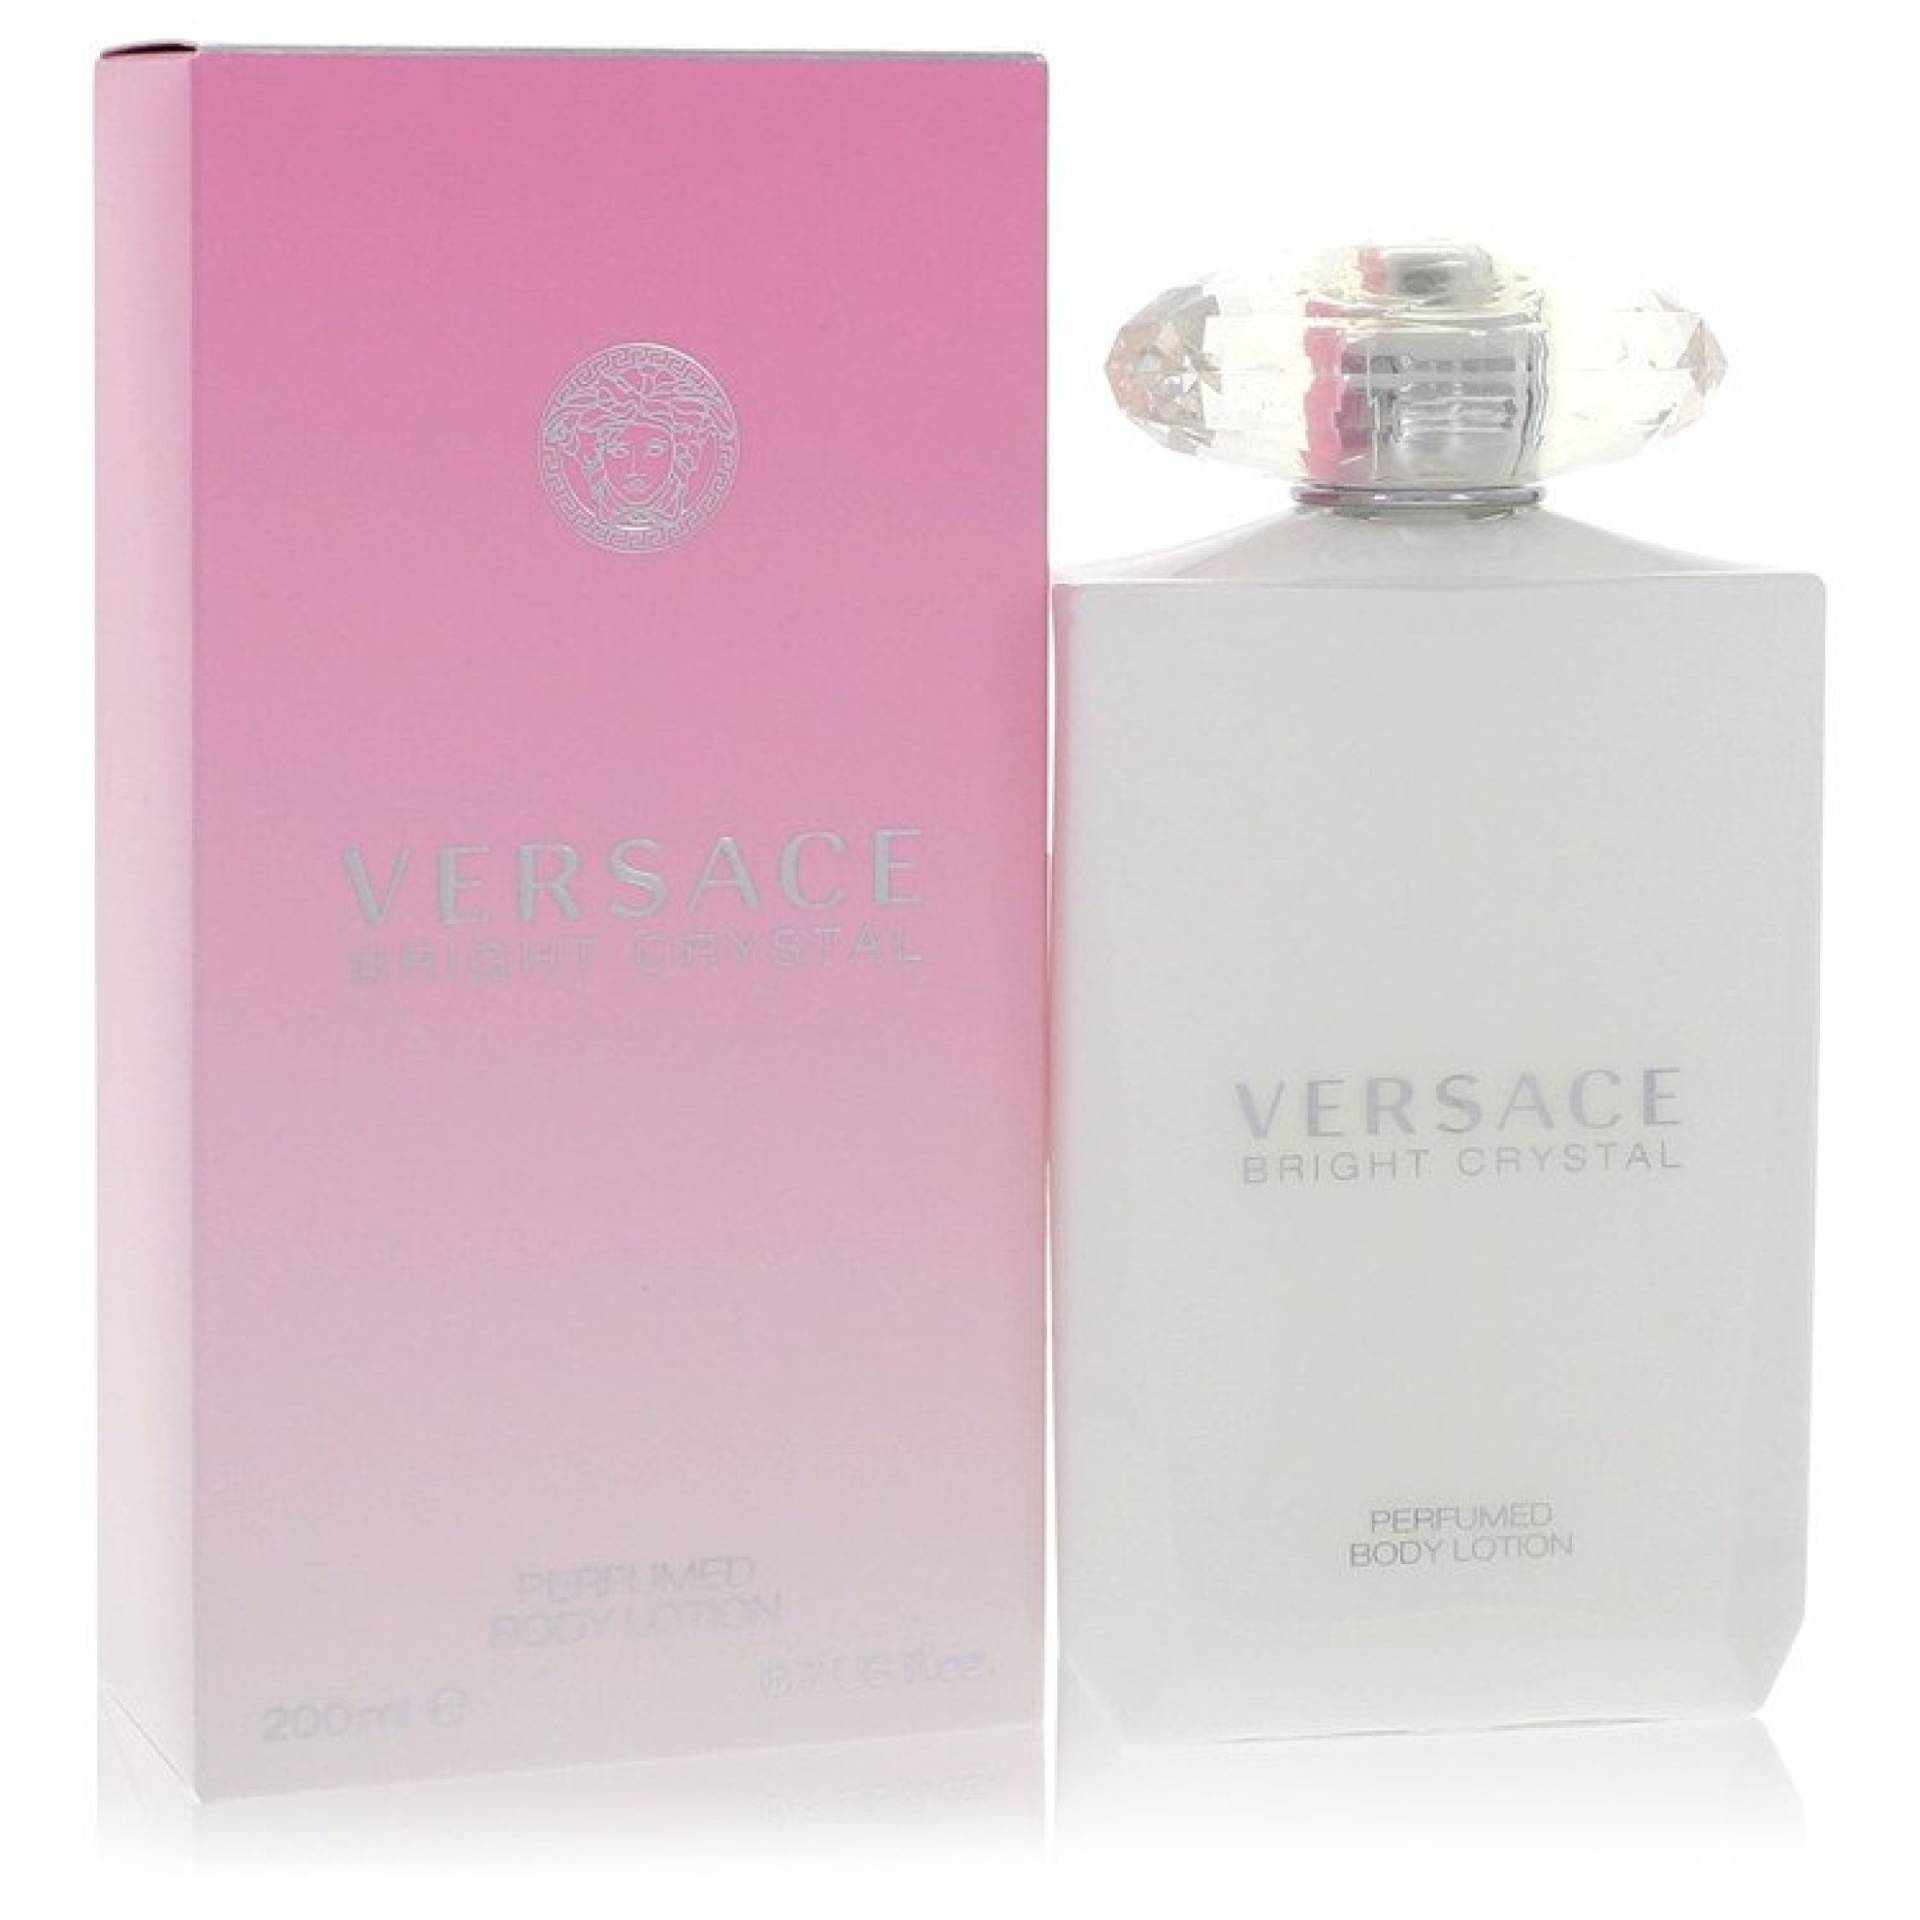 Versace Bright Crystal Body Lotion 198 ml von Versace